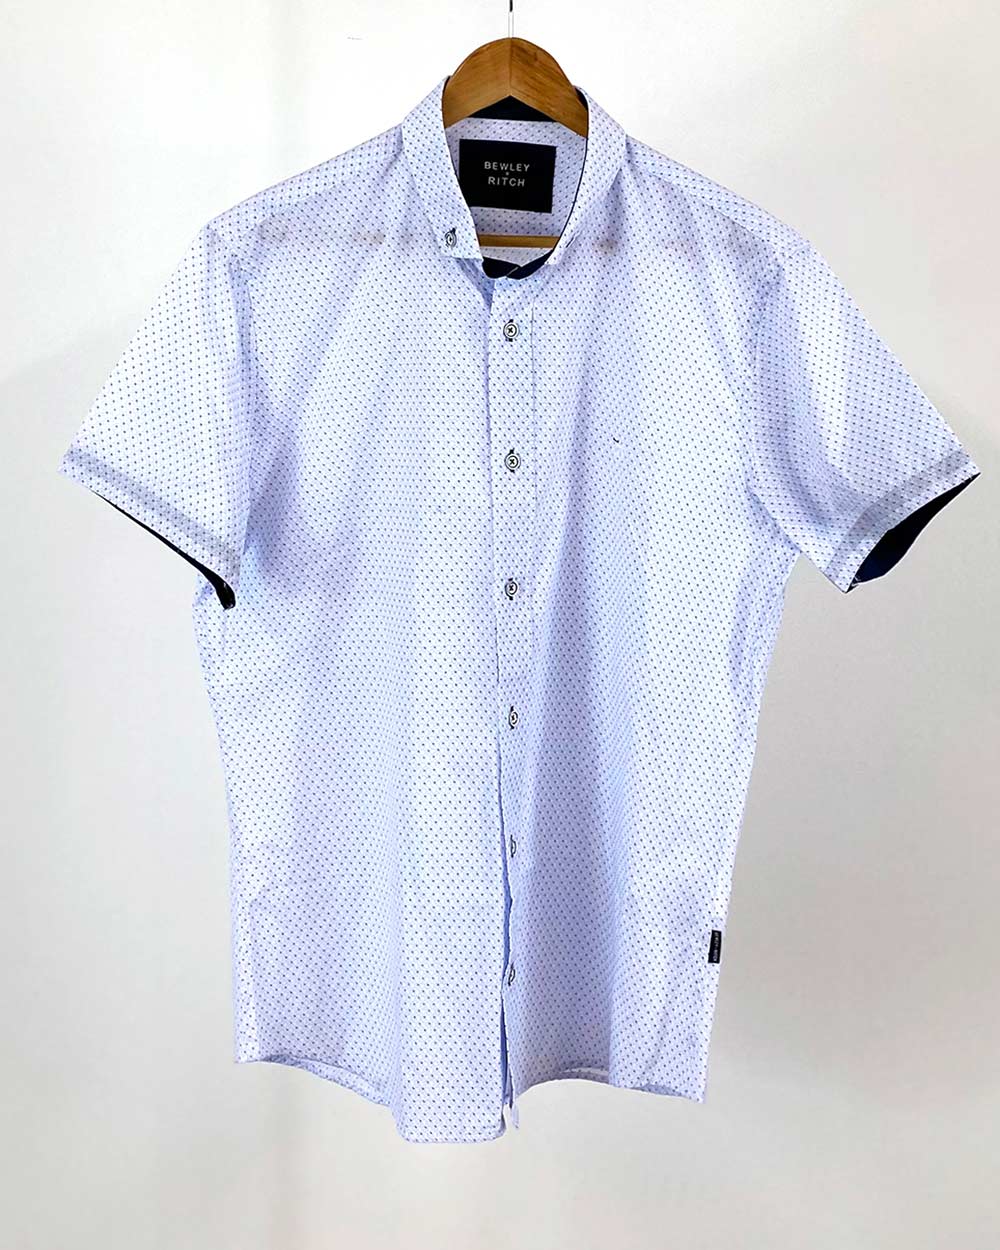 Bewley Ritch Patterned Shirt XL